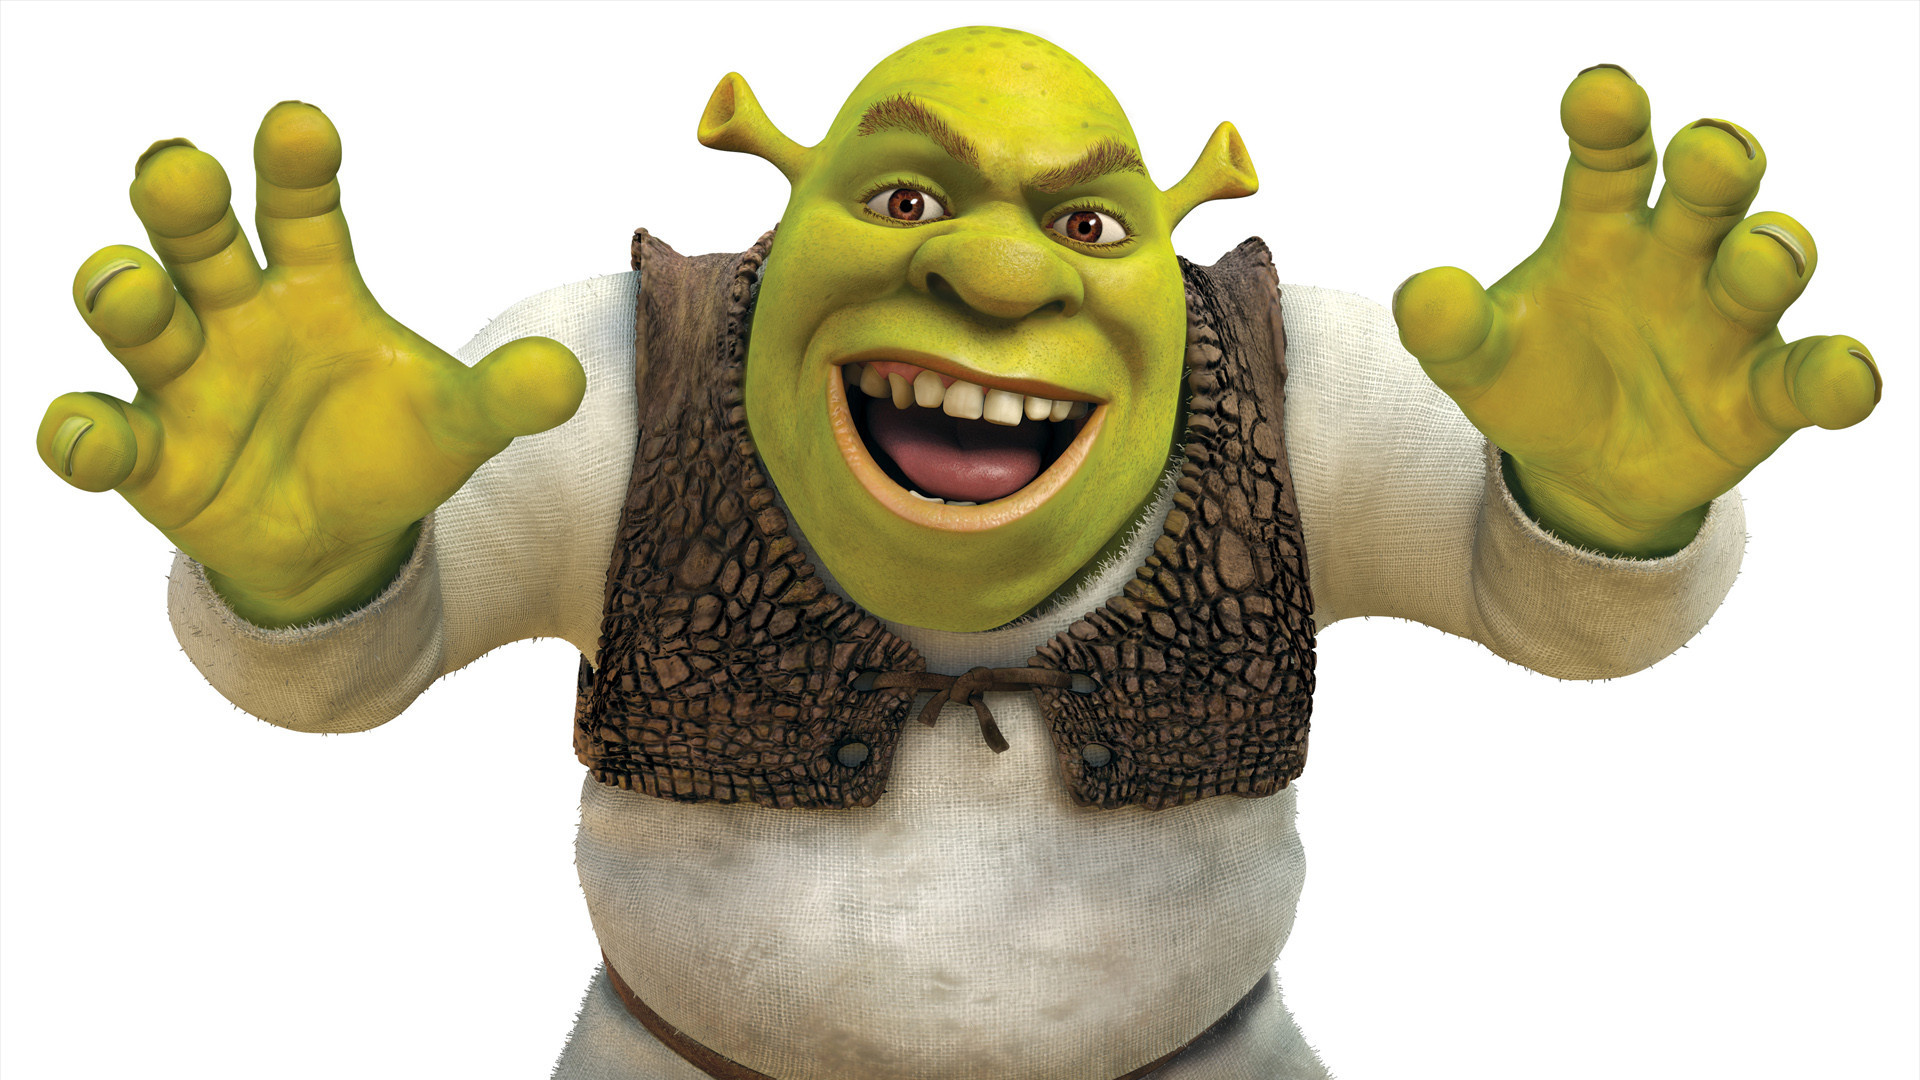 Shrek giving a thumbs up